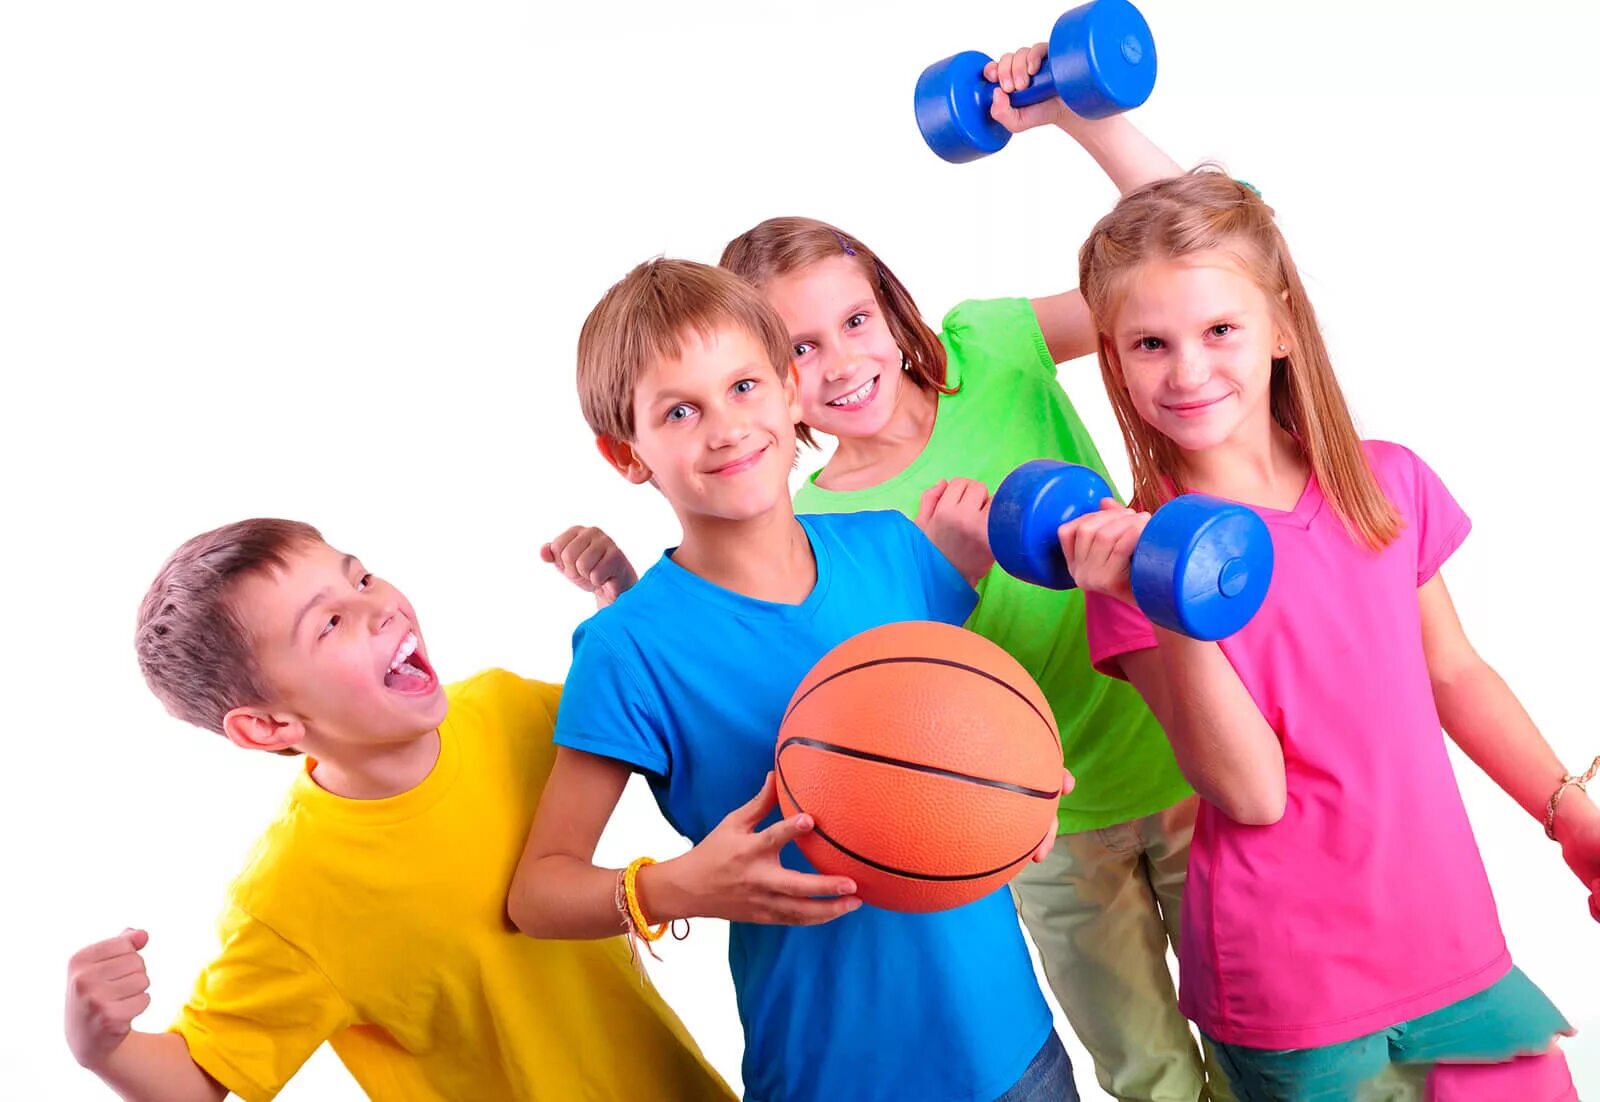 Фото детей спорт. Детский спорт. Спортивные дети. Спортивные игры для детей. Спордетям.